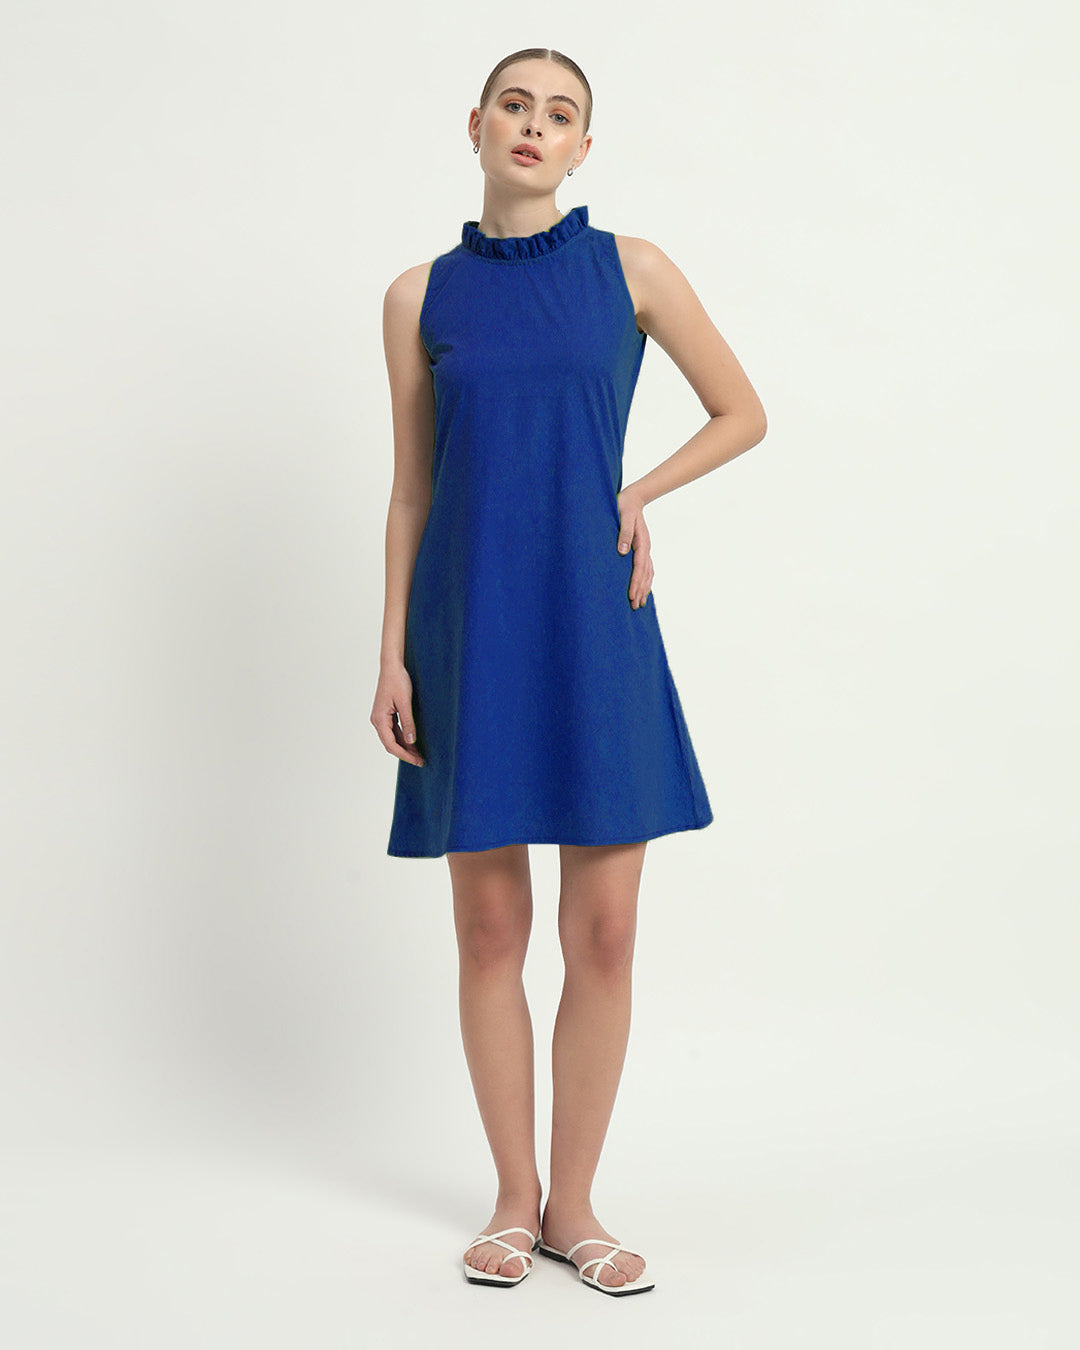 The Cobalt Angelica Cotton Dress